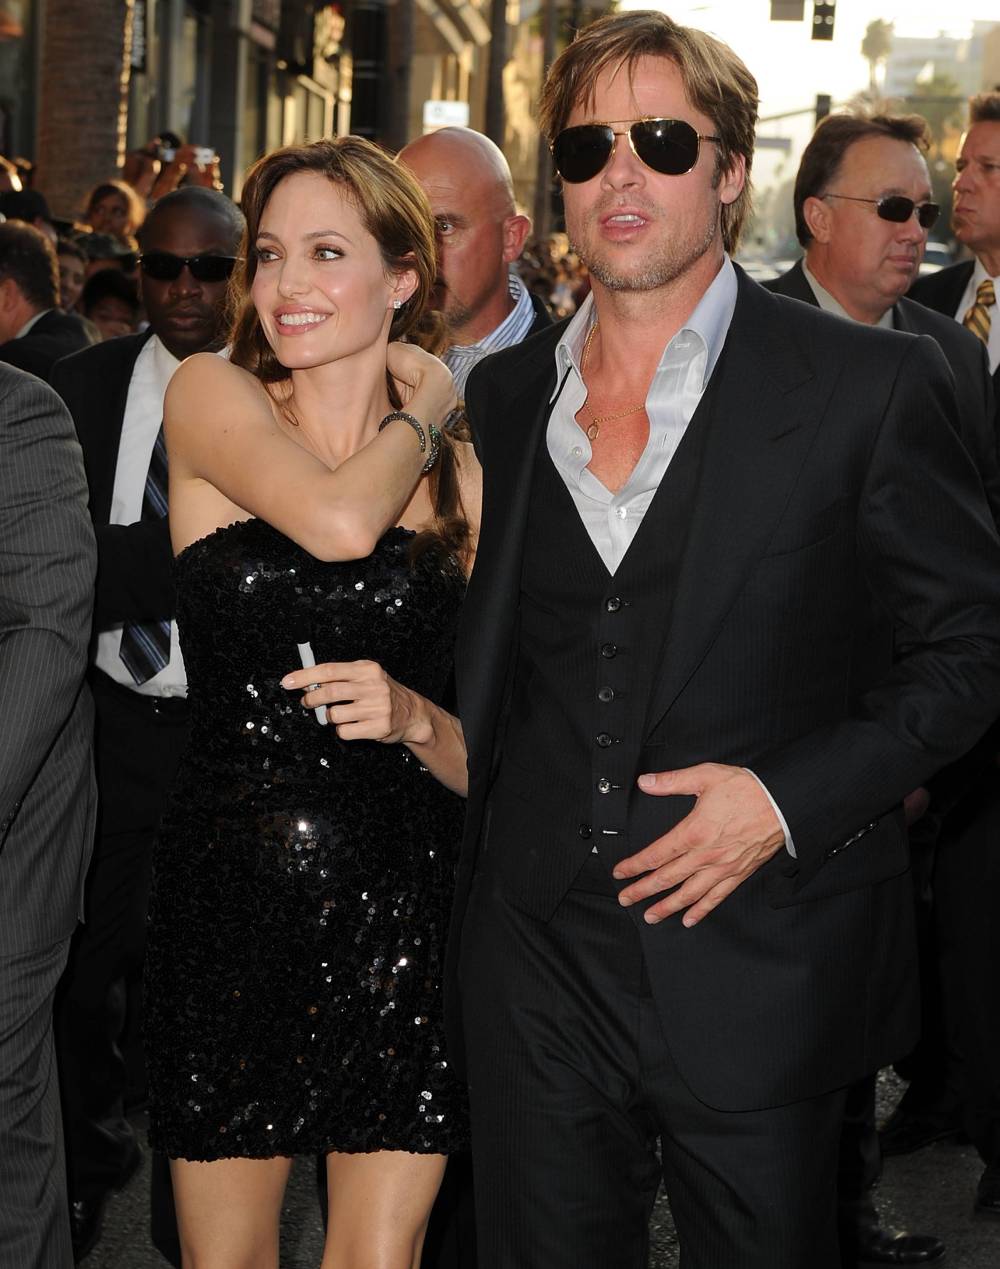 Angelina Jolie i Brad Pitt na premierze filmu 